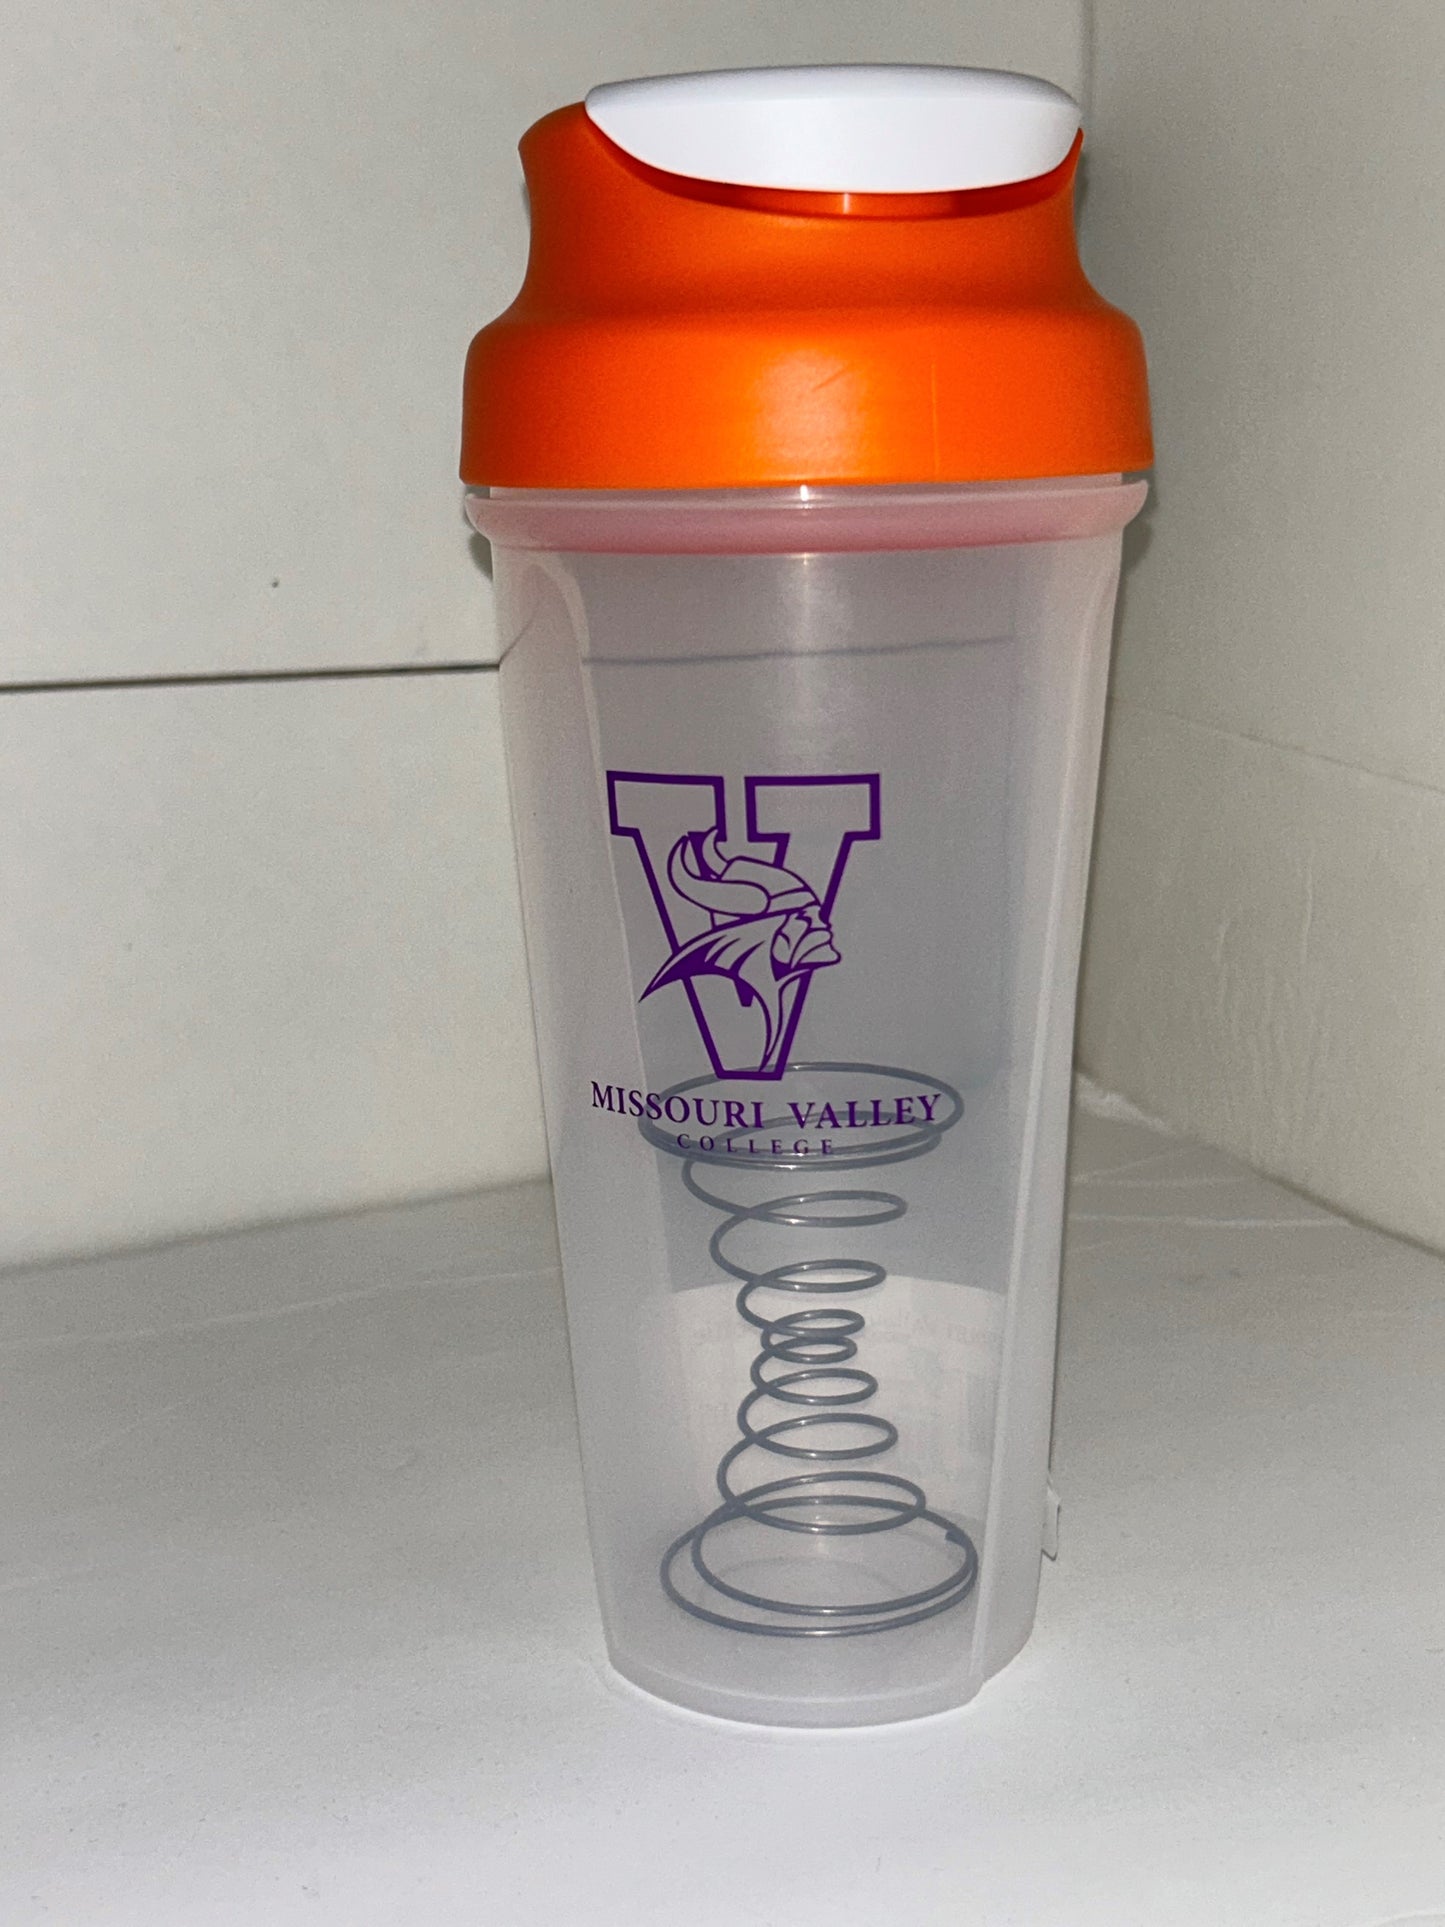 Accessories-Shaker bottle with Missouri Valley logo